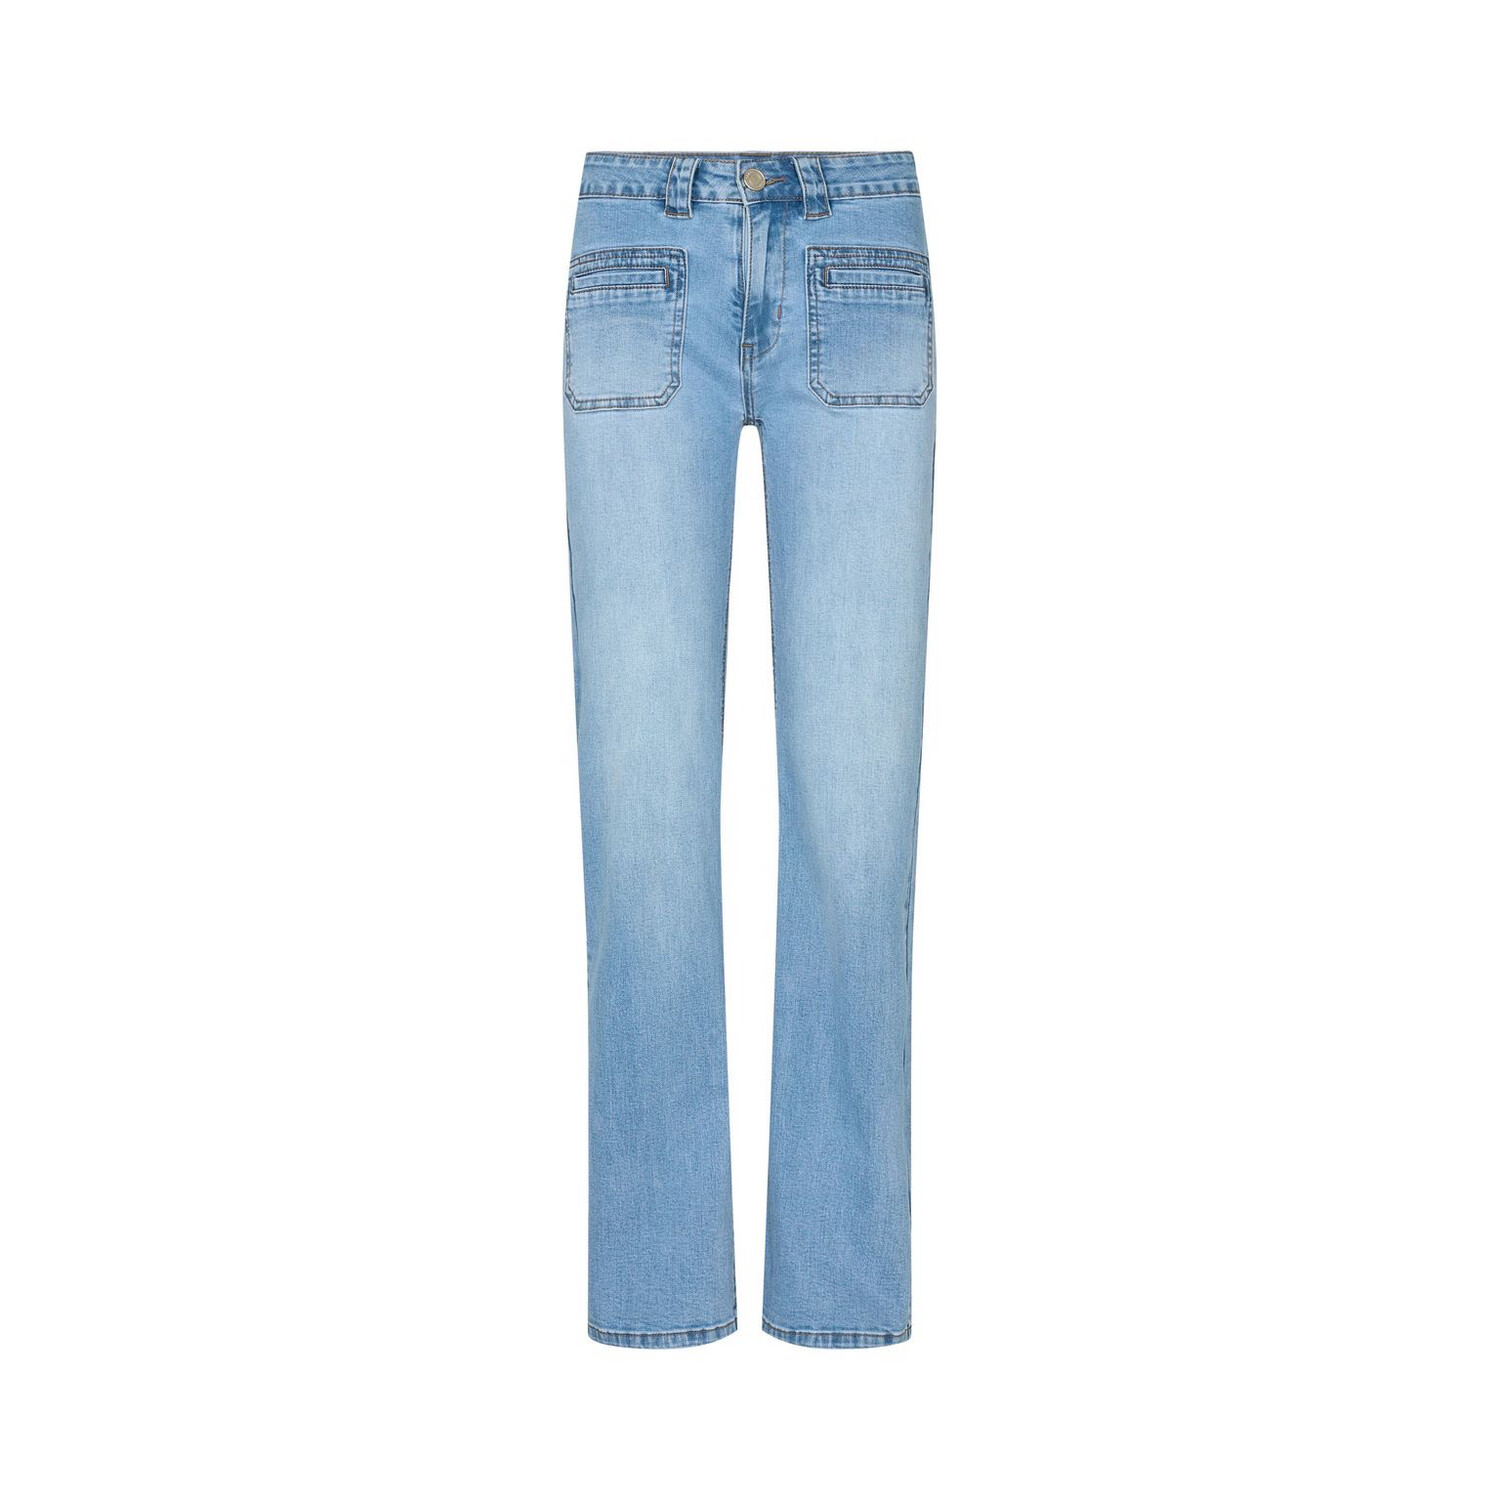 Sofie Schnoor Pocket Flare Jeans